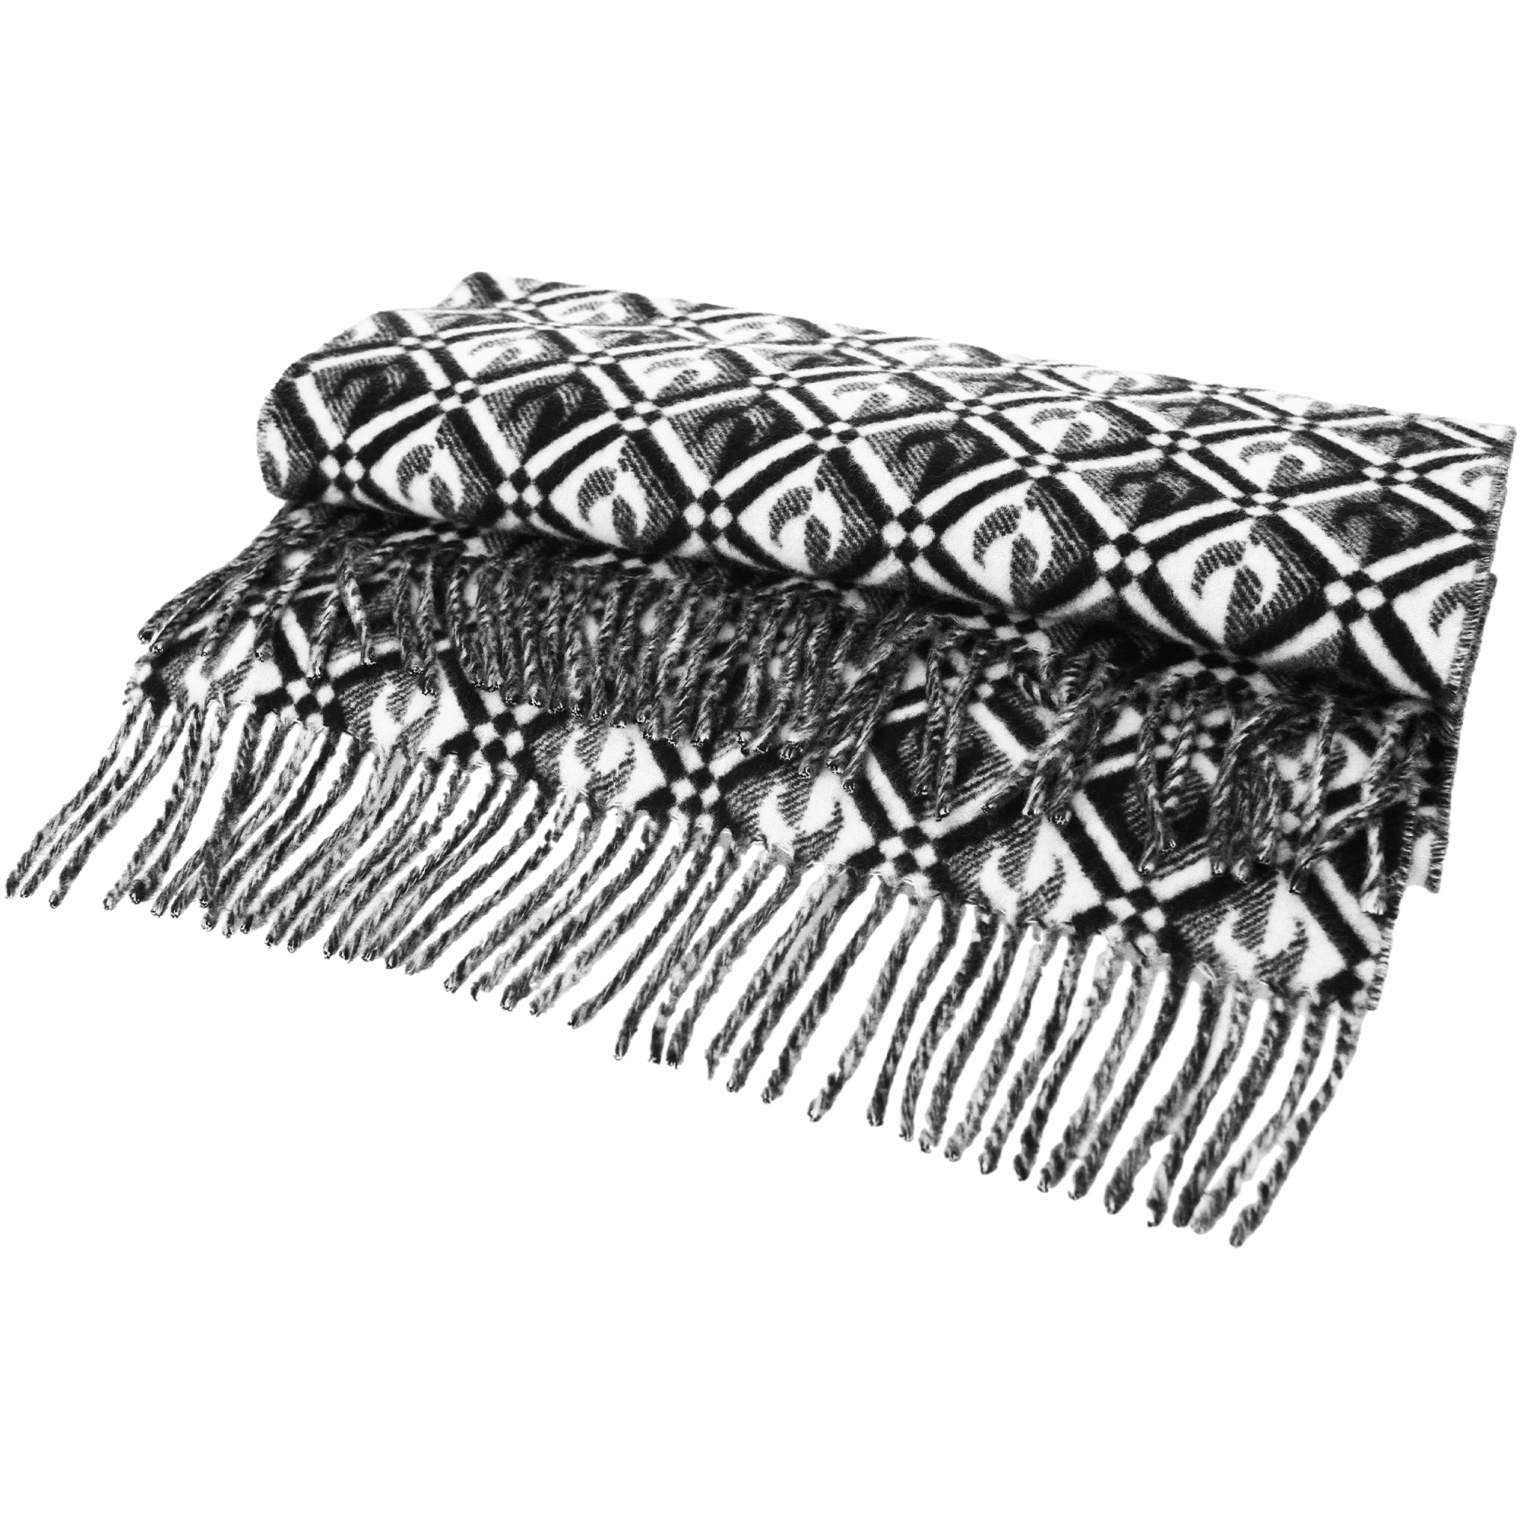 MARINE SERRE Wool scarf with logo graphic